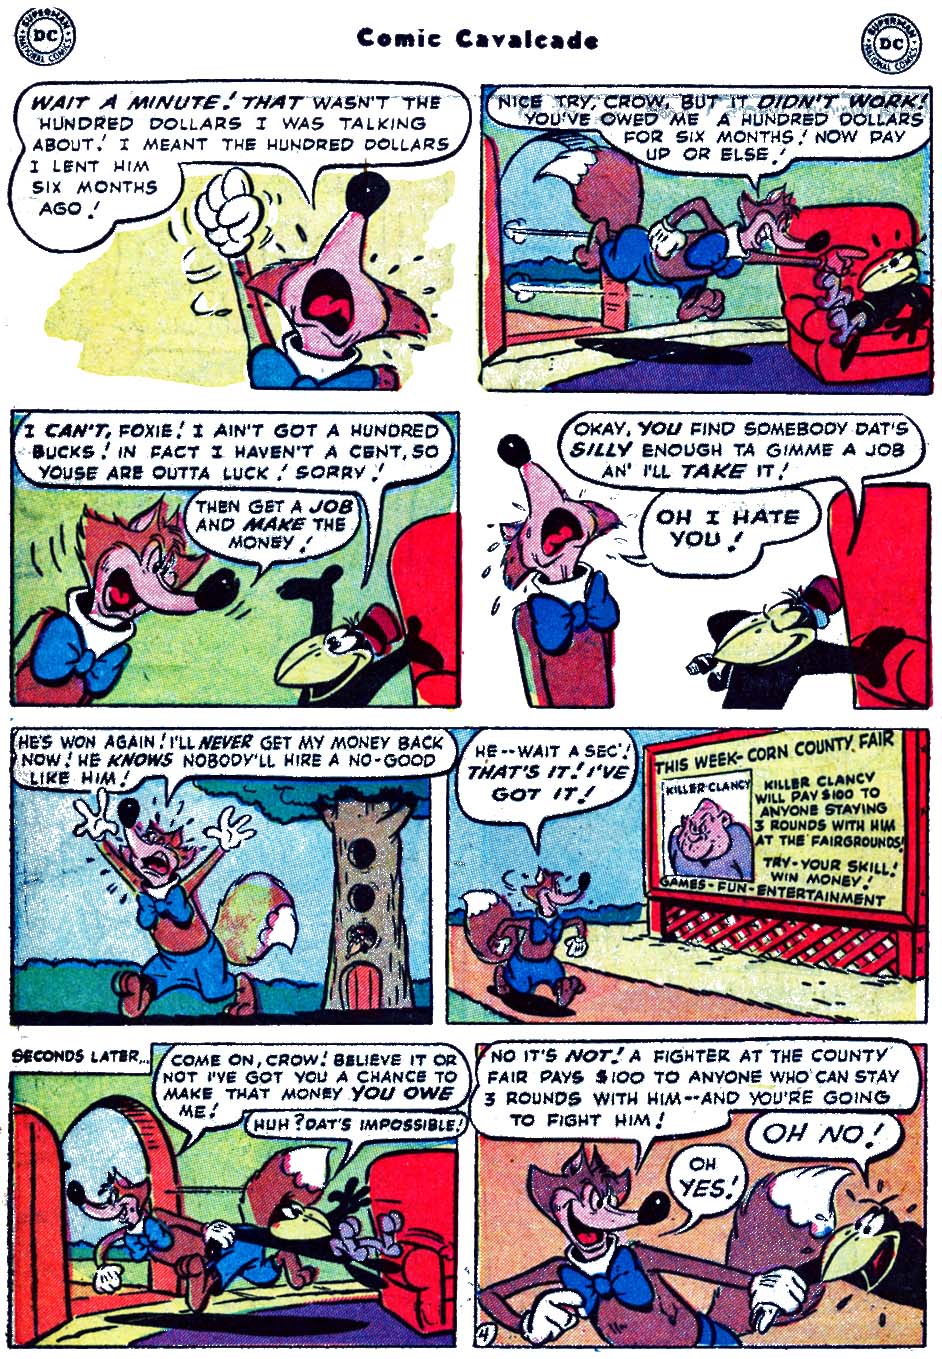 Comic Cavalcade issue 55 - Page 6